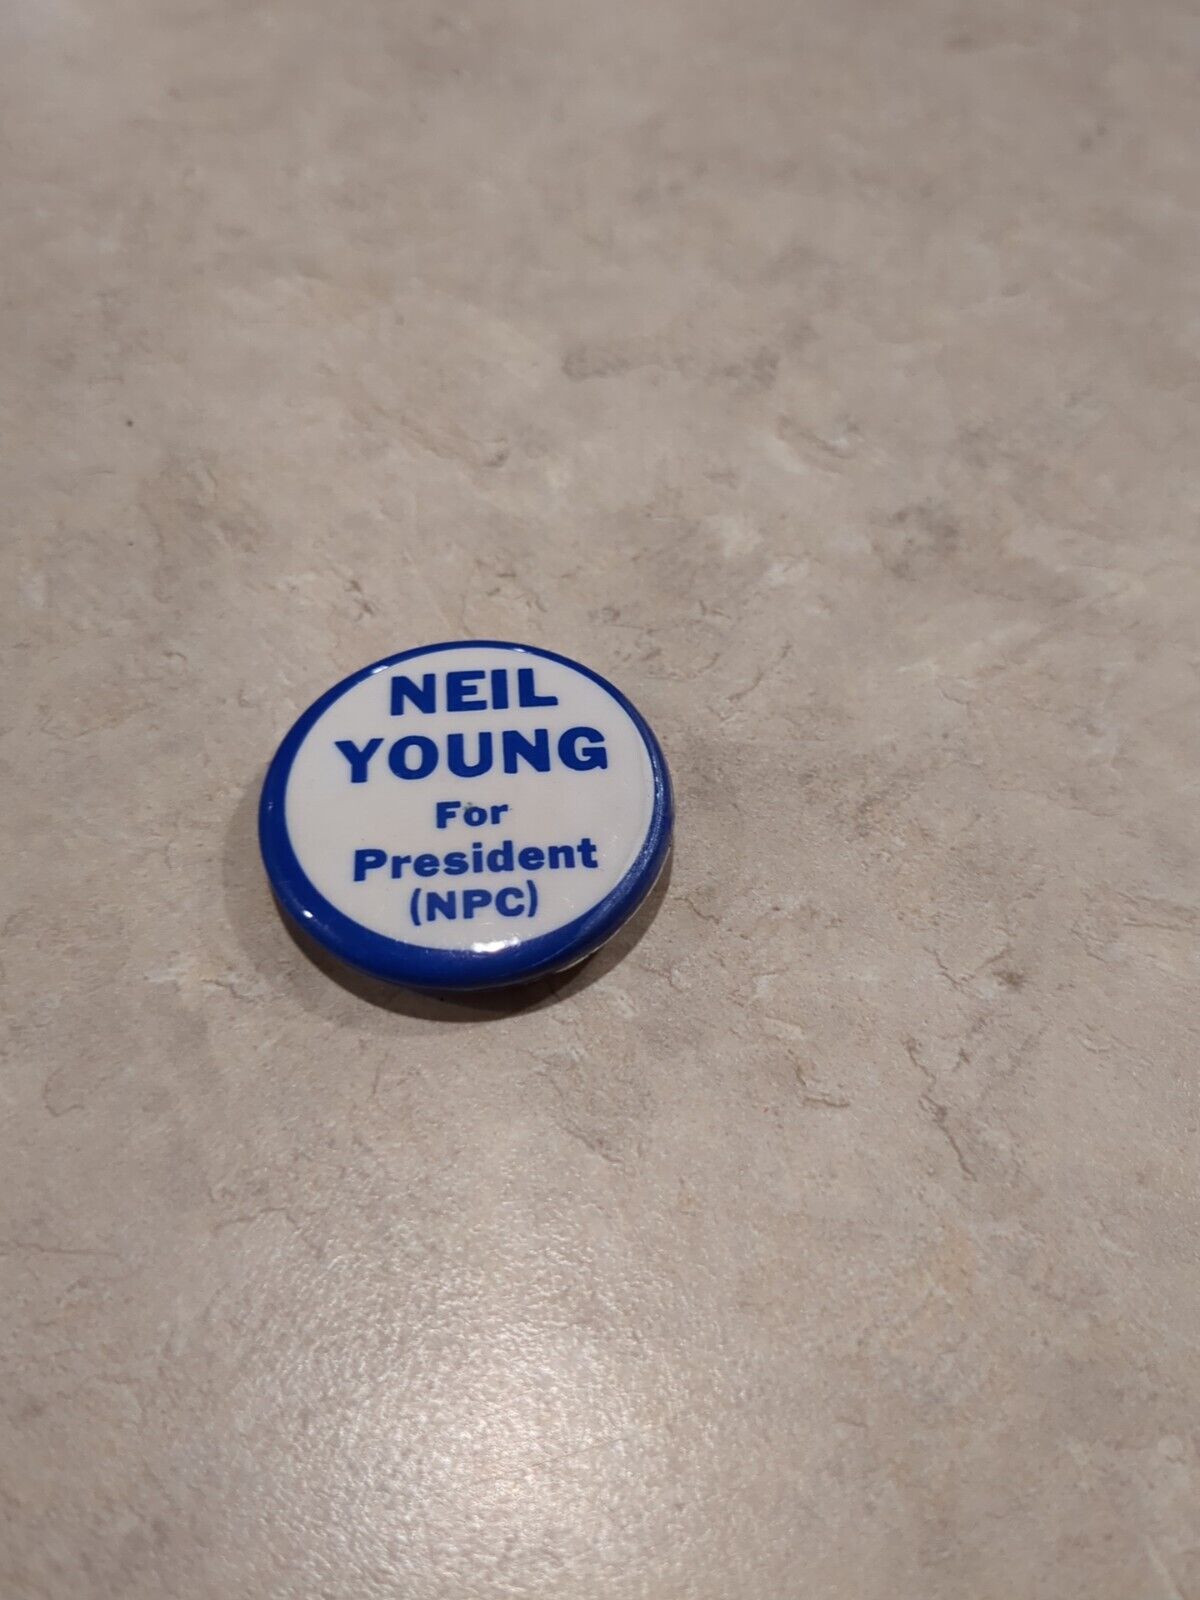 Vintage Pinback Button Neil Young For President NPC White Blue